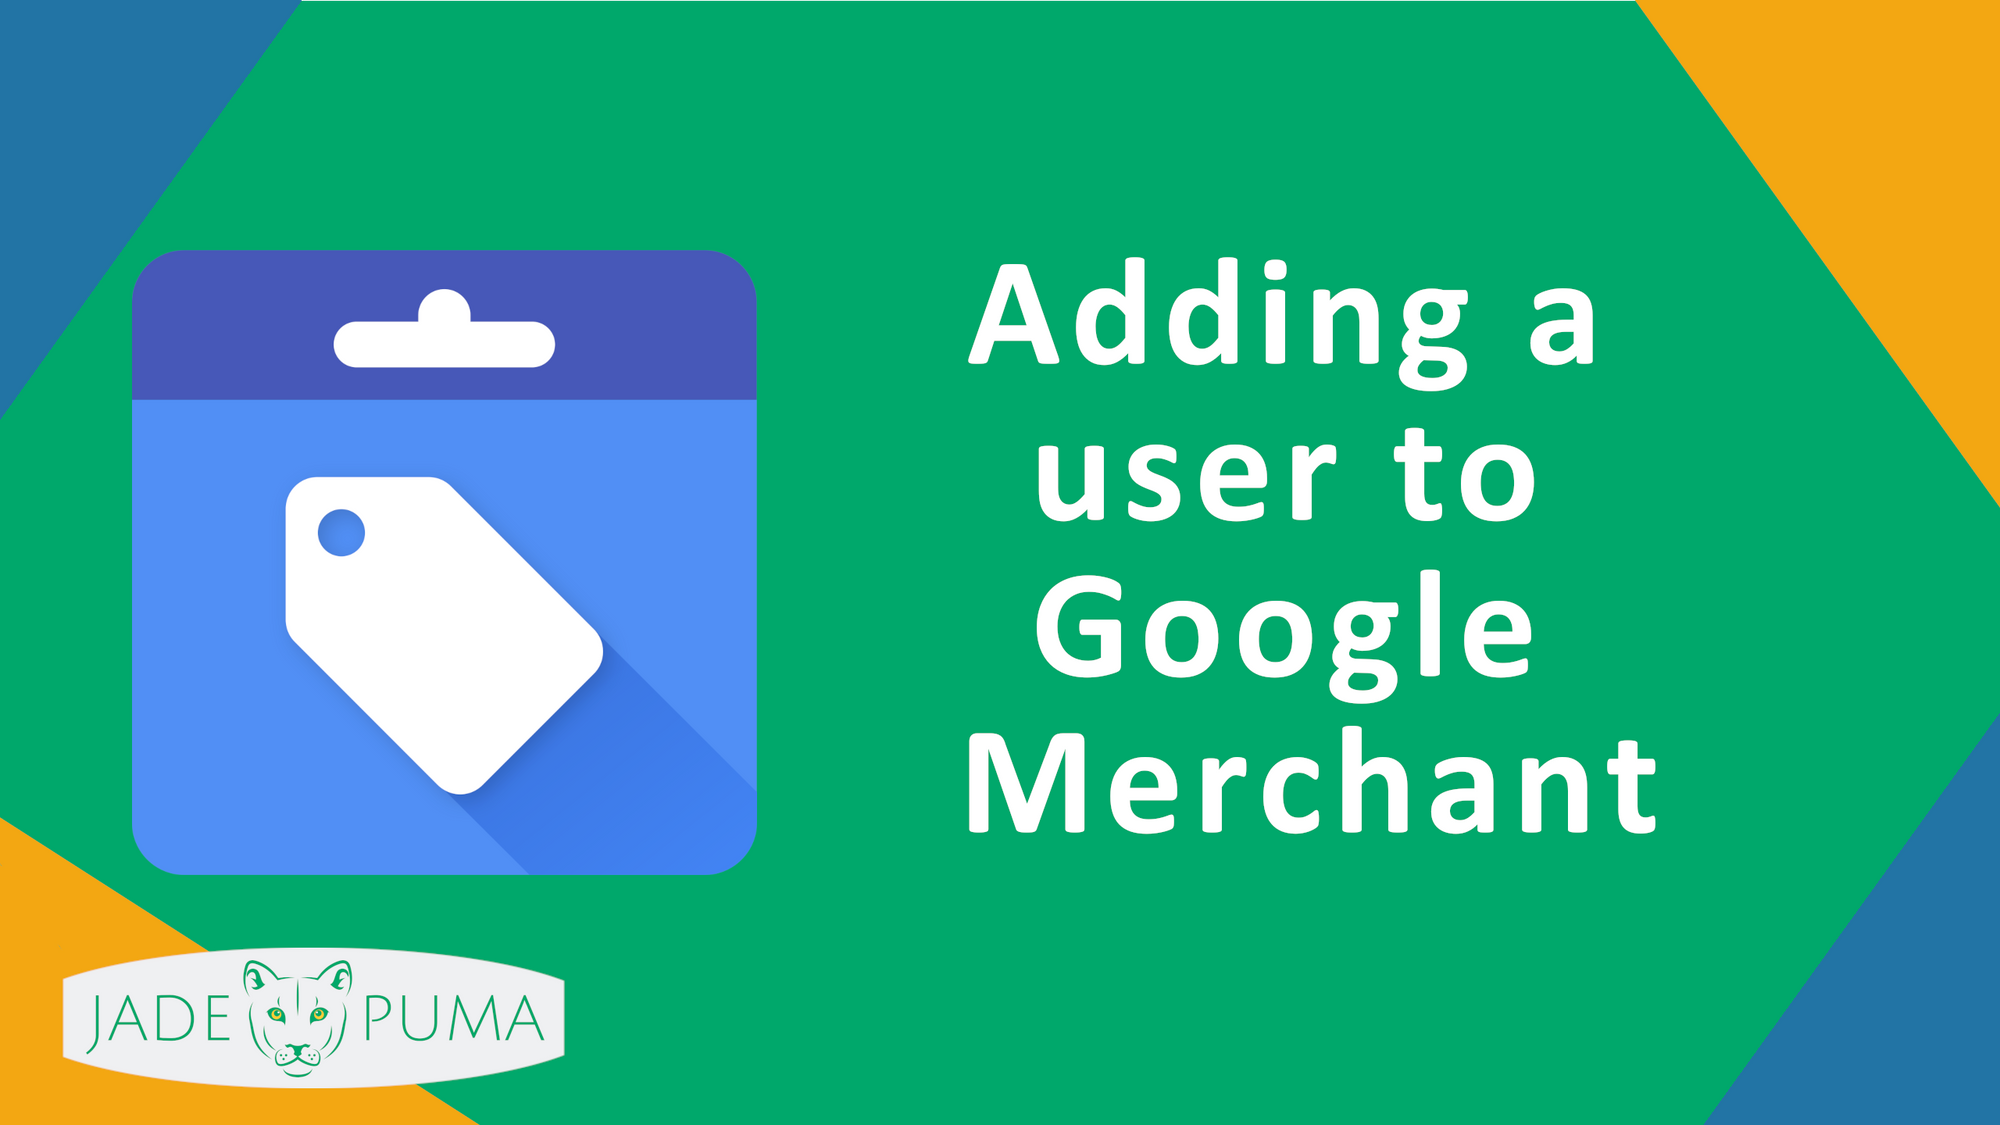 Adding a user to Google Merchant